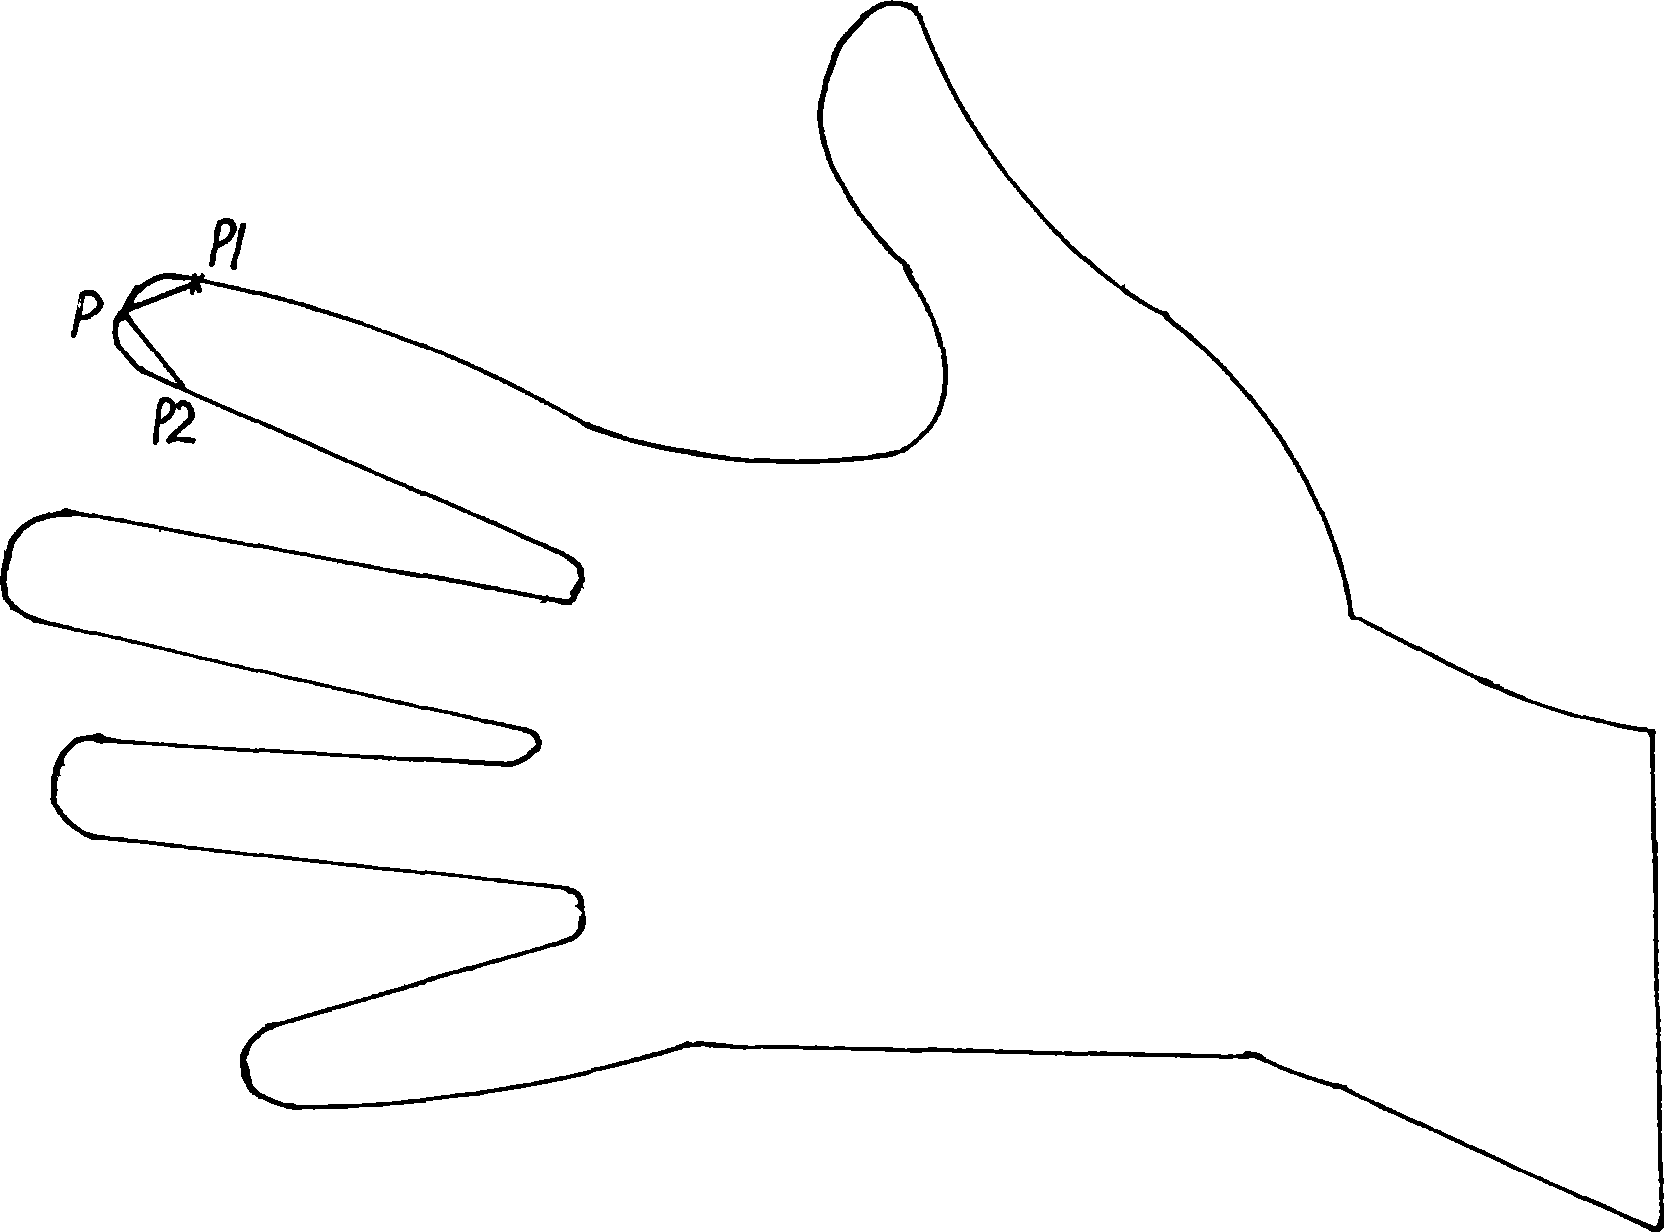 Hand shape recognition method